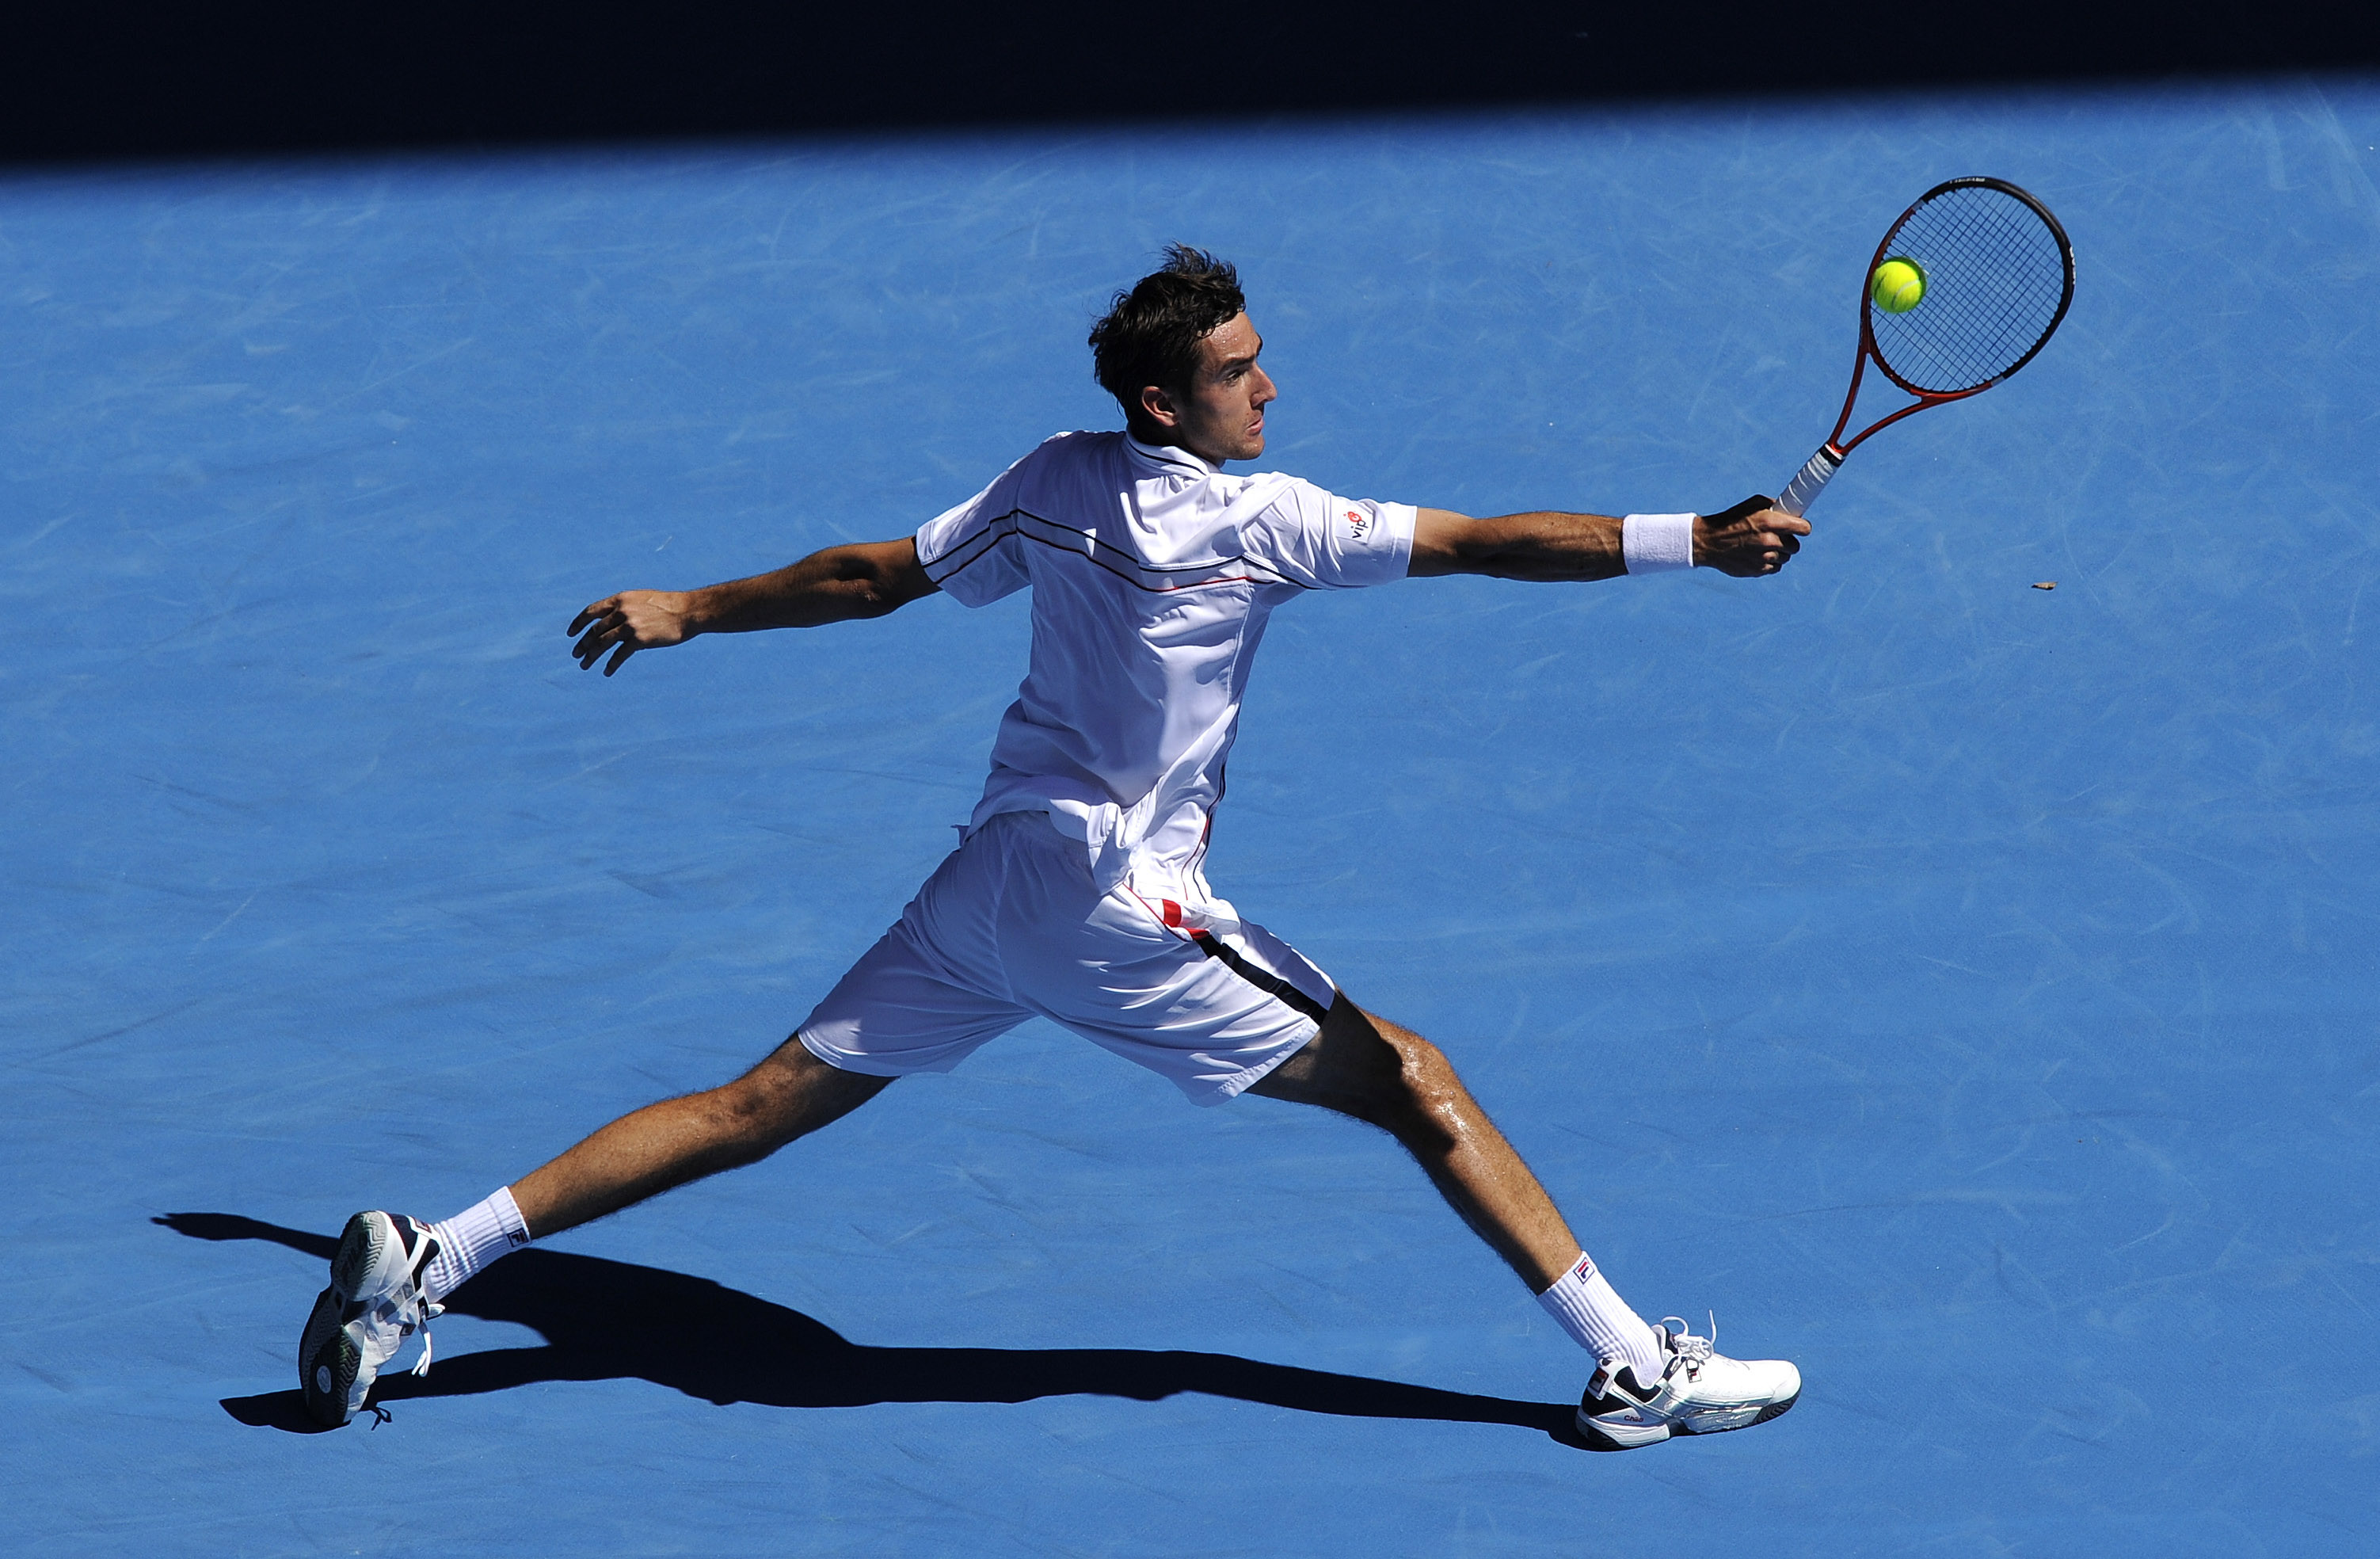 Kvartsfinal, Andy Murray, Marin Cilic, Roger Federer, Andy Roddick, Juan Martin del Potro, Australian Open, Tennis